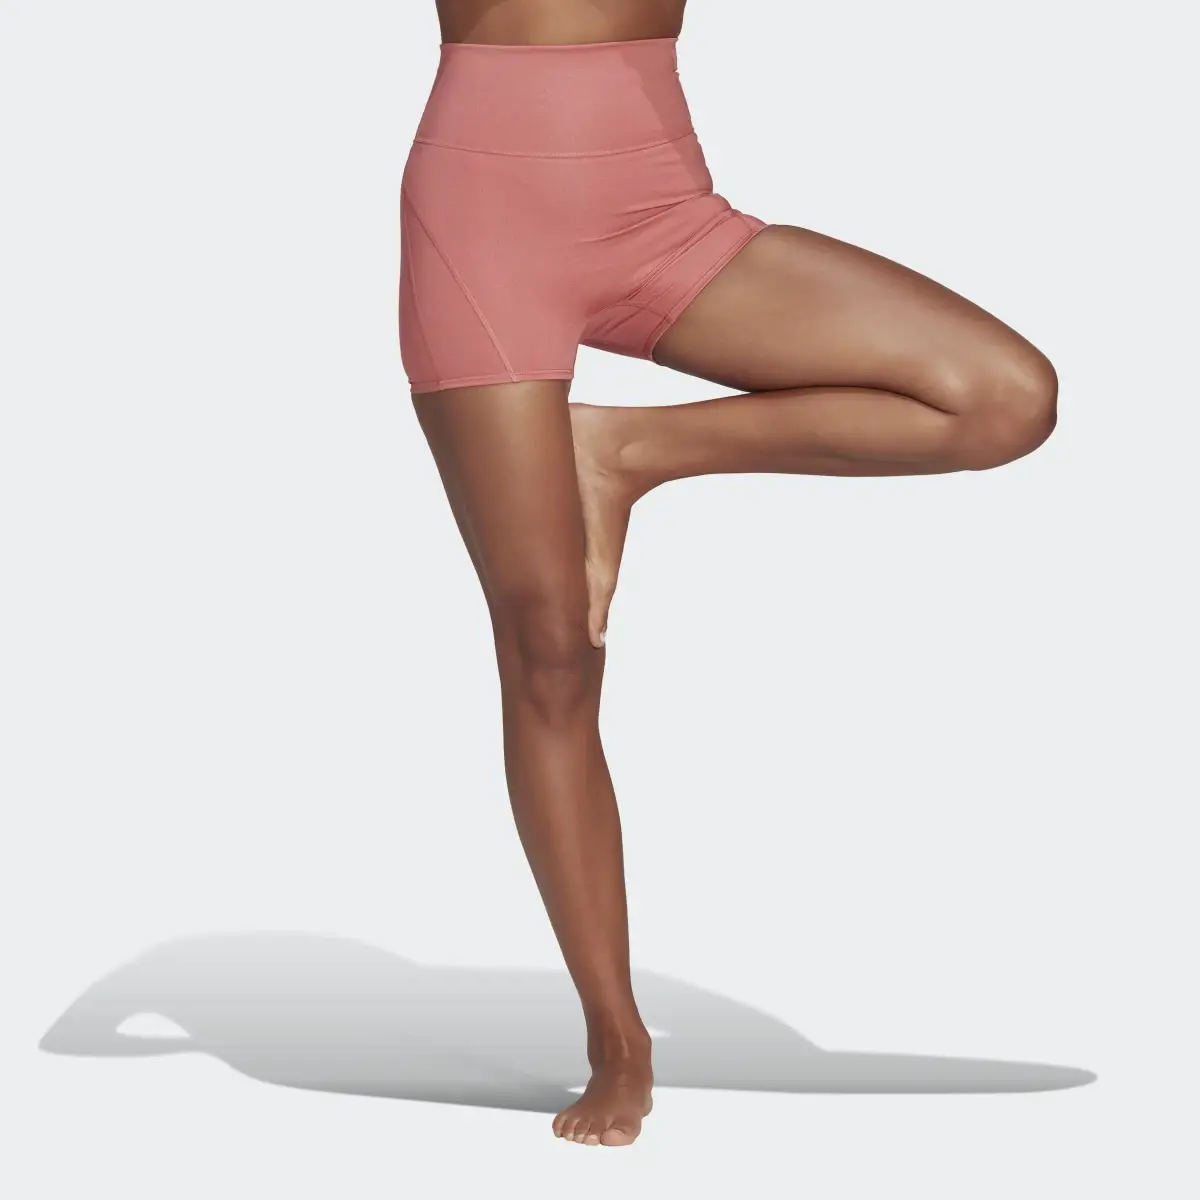 Adidas Yoga Studio Luxe Fire Super-High-Waisted Short Leggings. 1